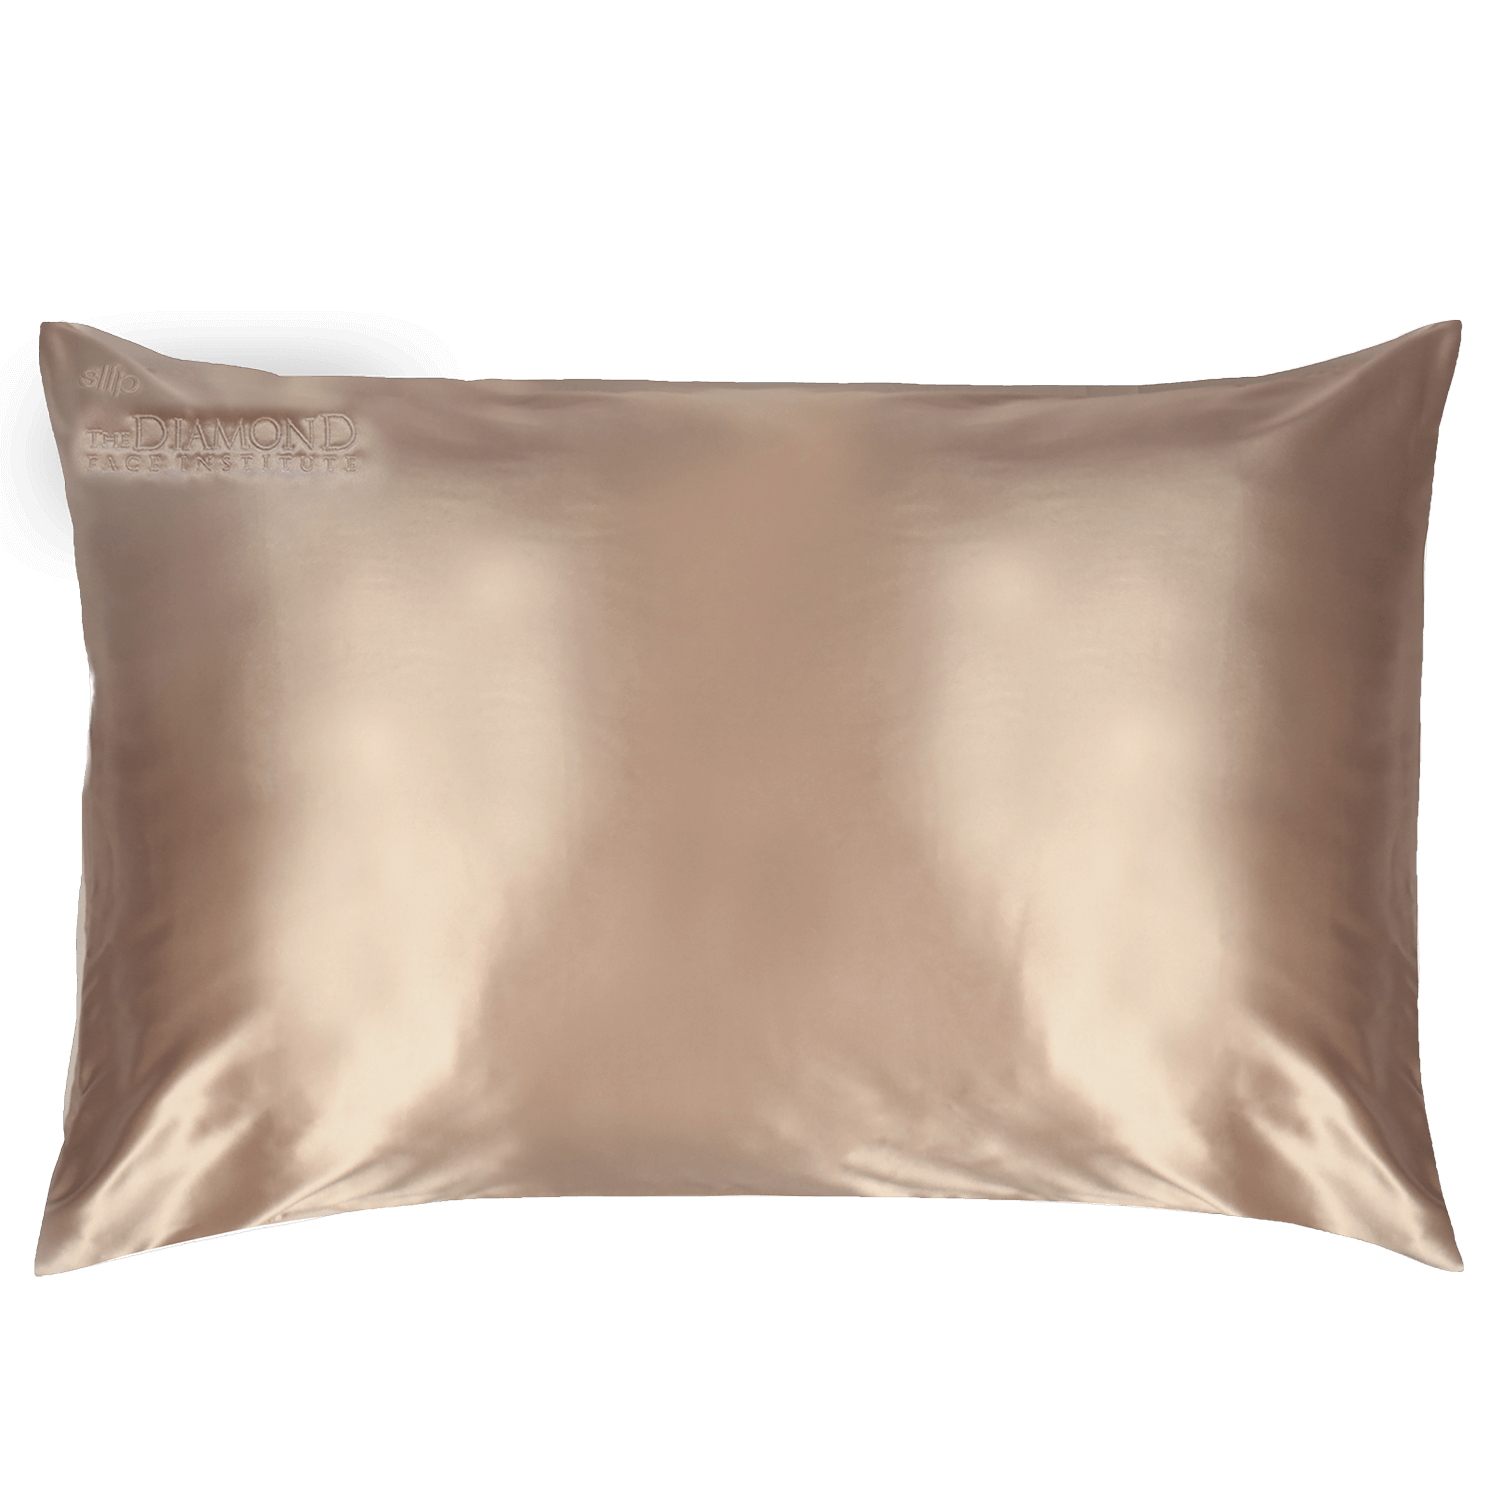 Monogrammed Pillowcase in caramel